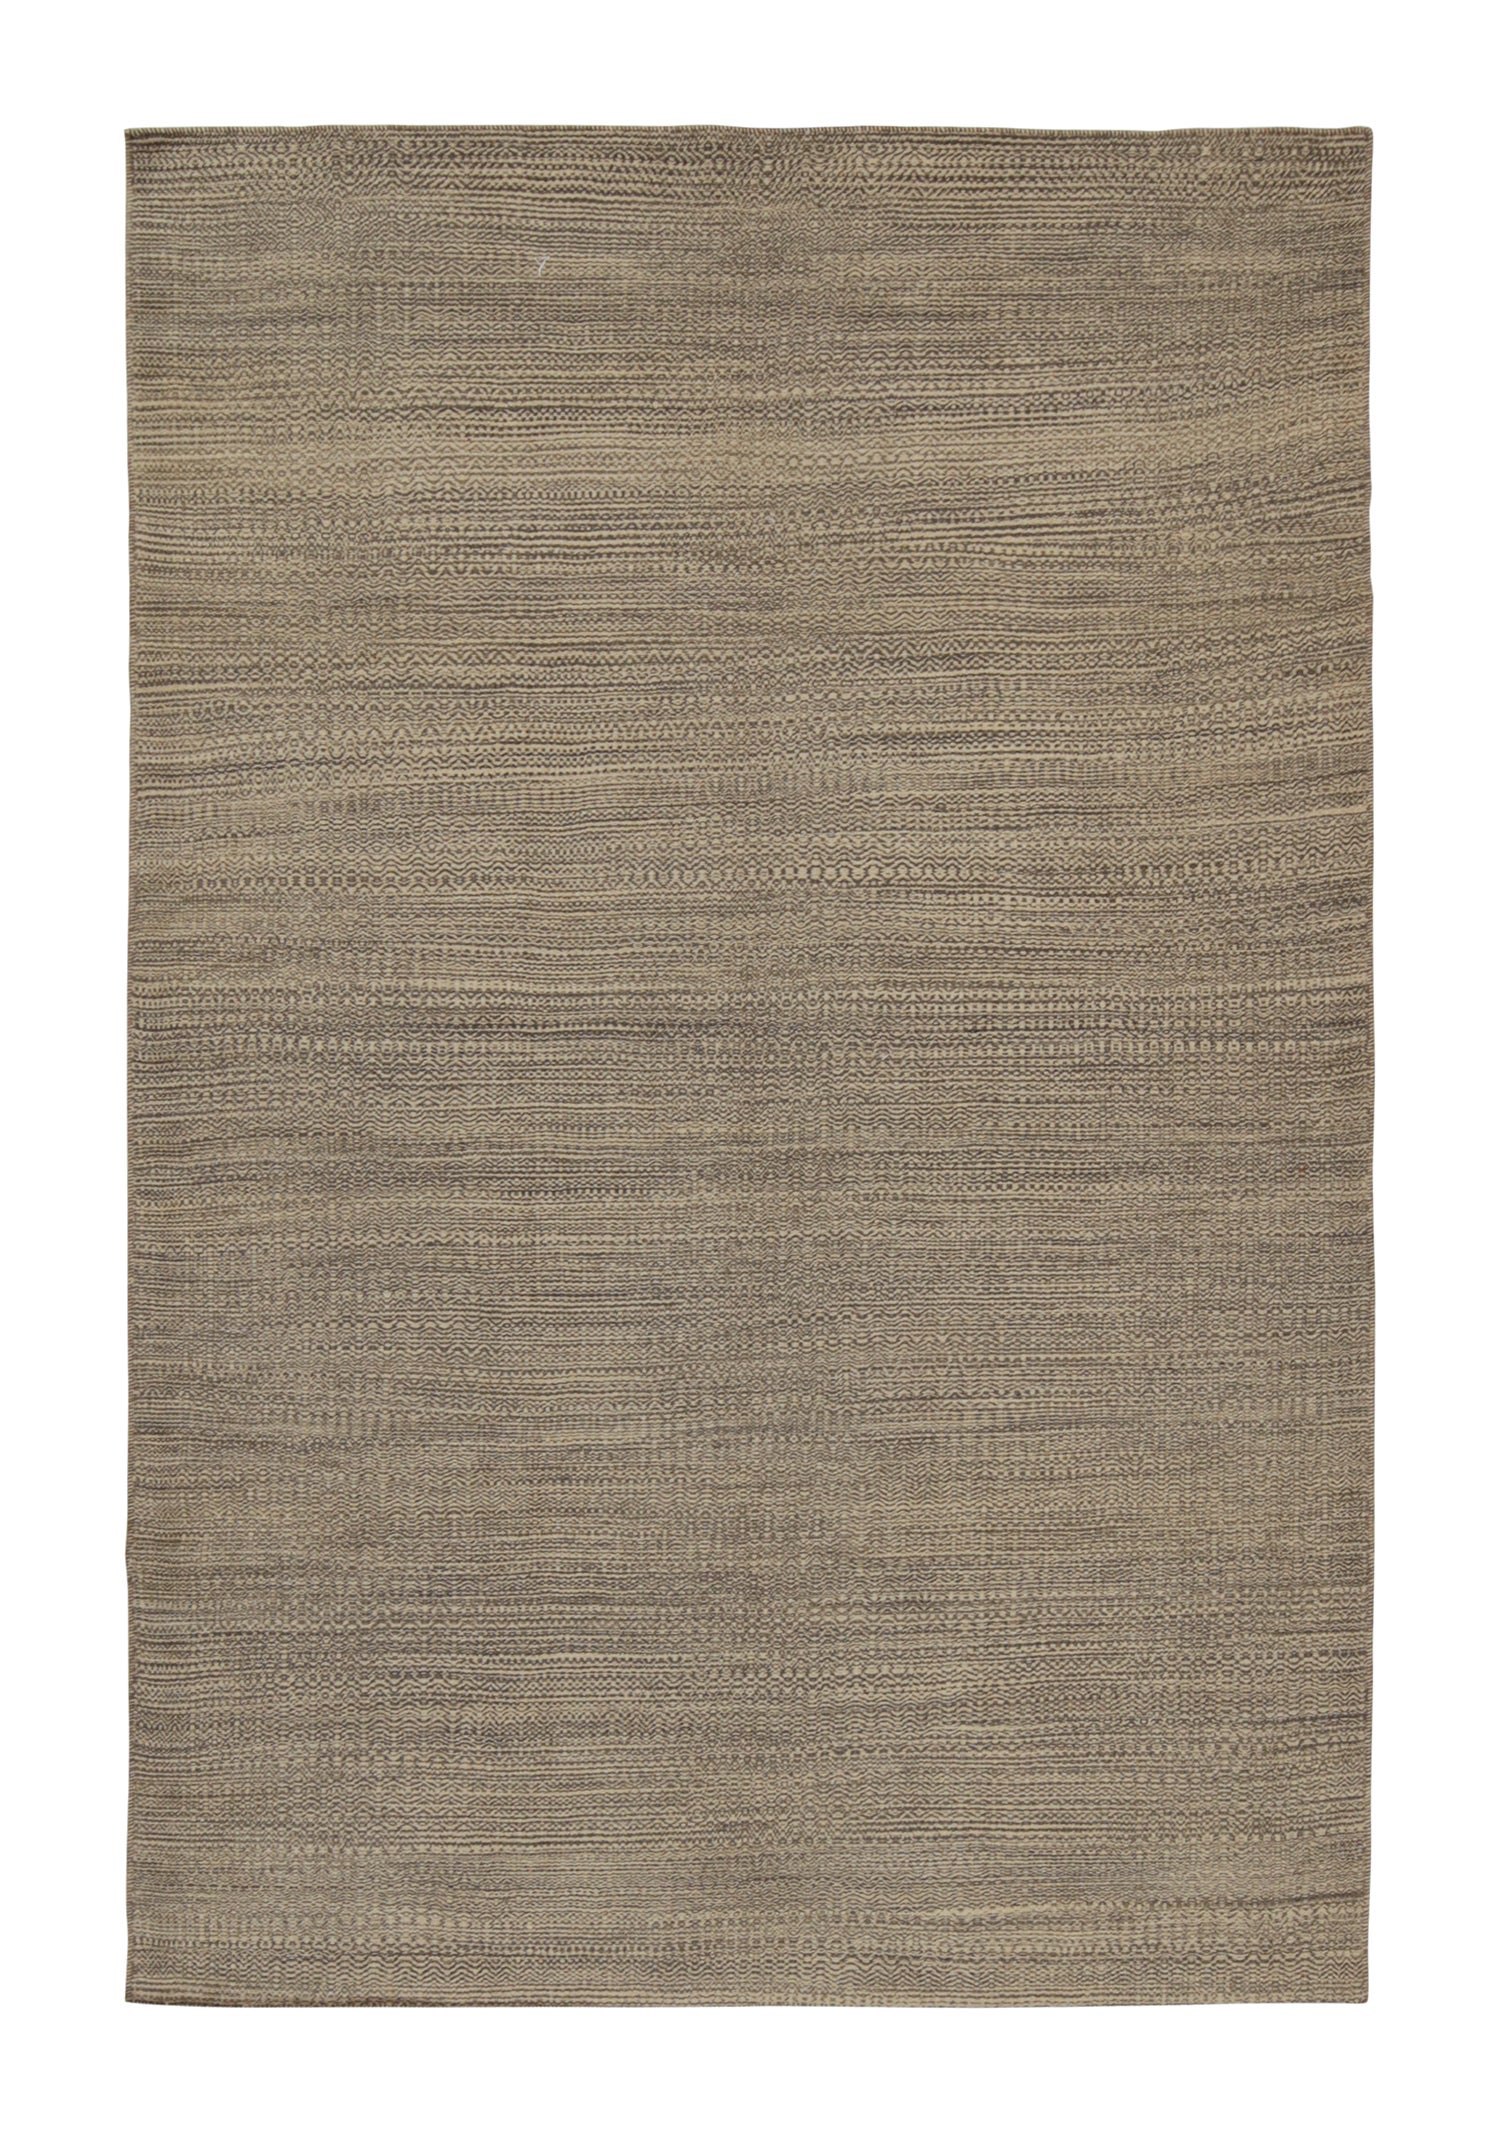 Rug & Kilim’s Contemporary Persian Kilim in Beige-Brown Stripes